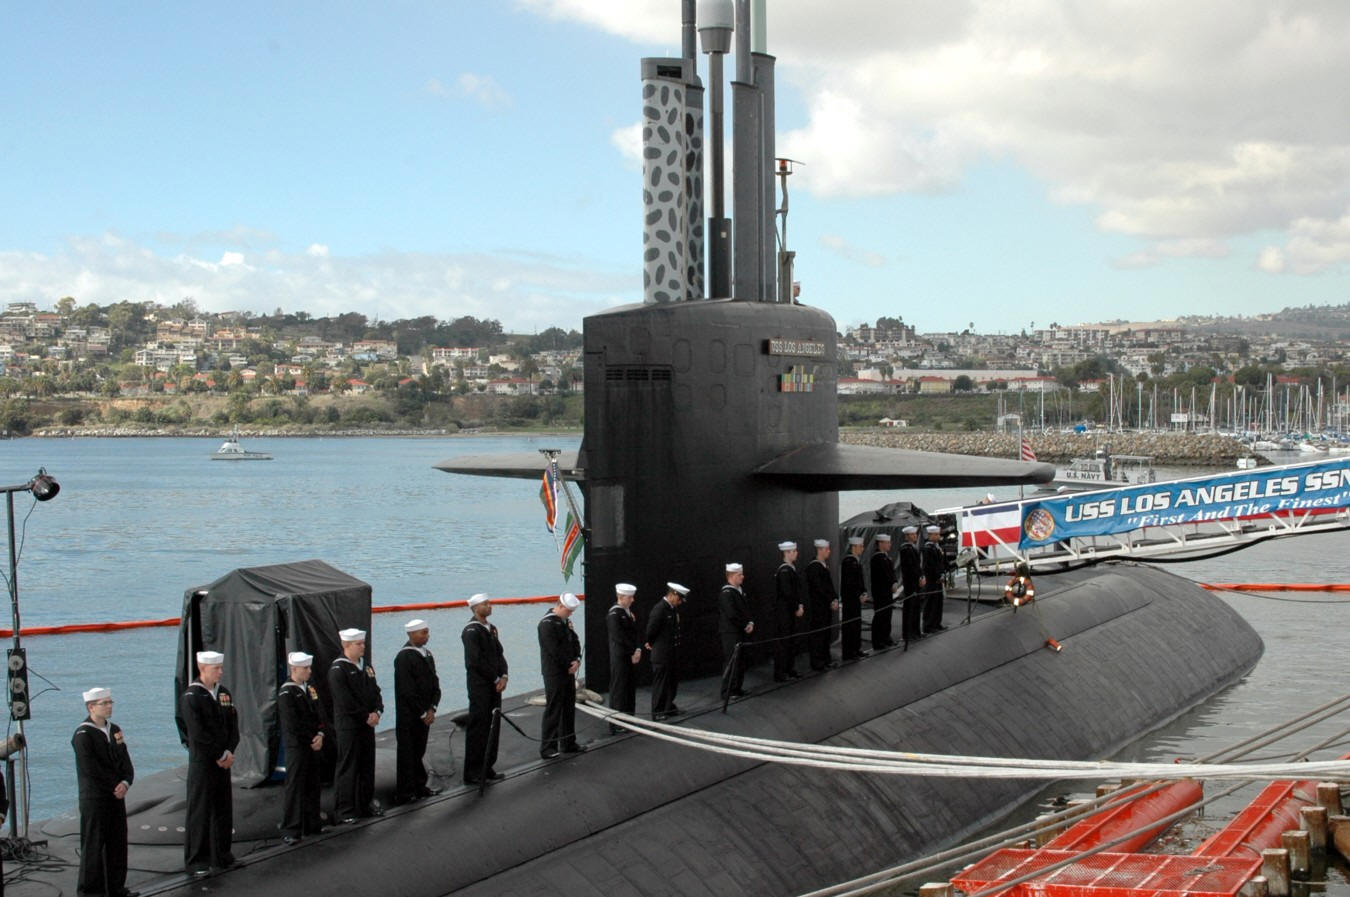 ssn-688 uss los angeles attack submarine us navy newport news